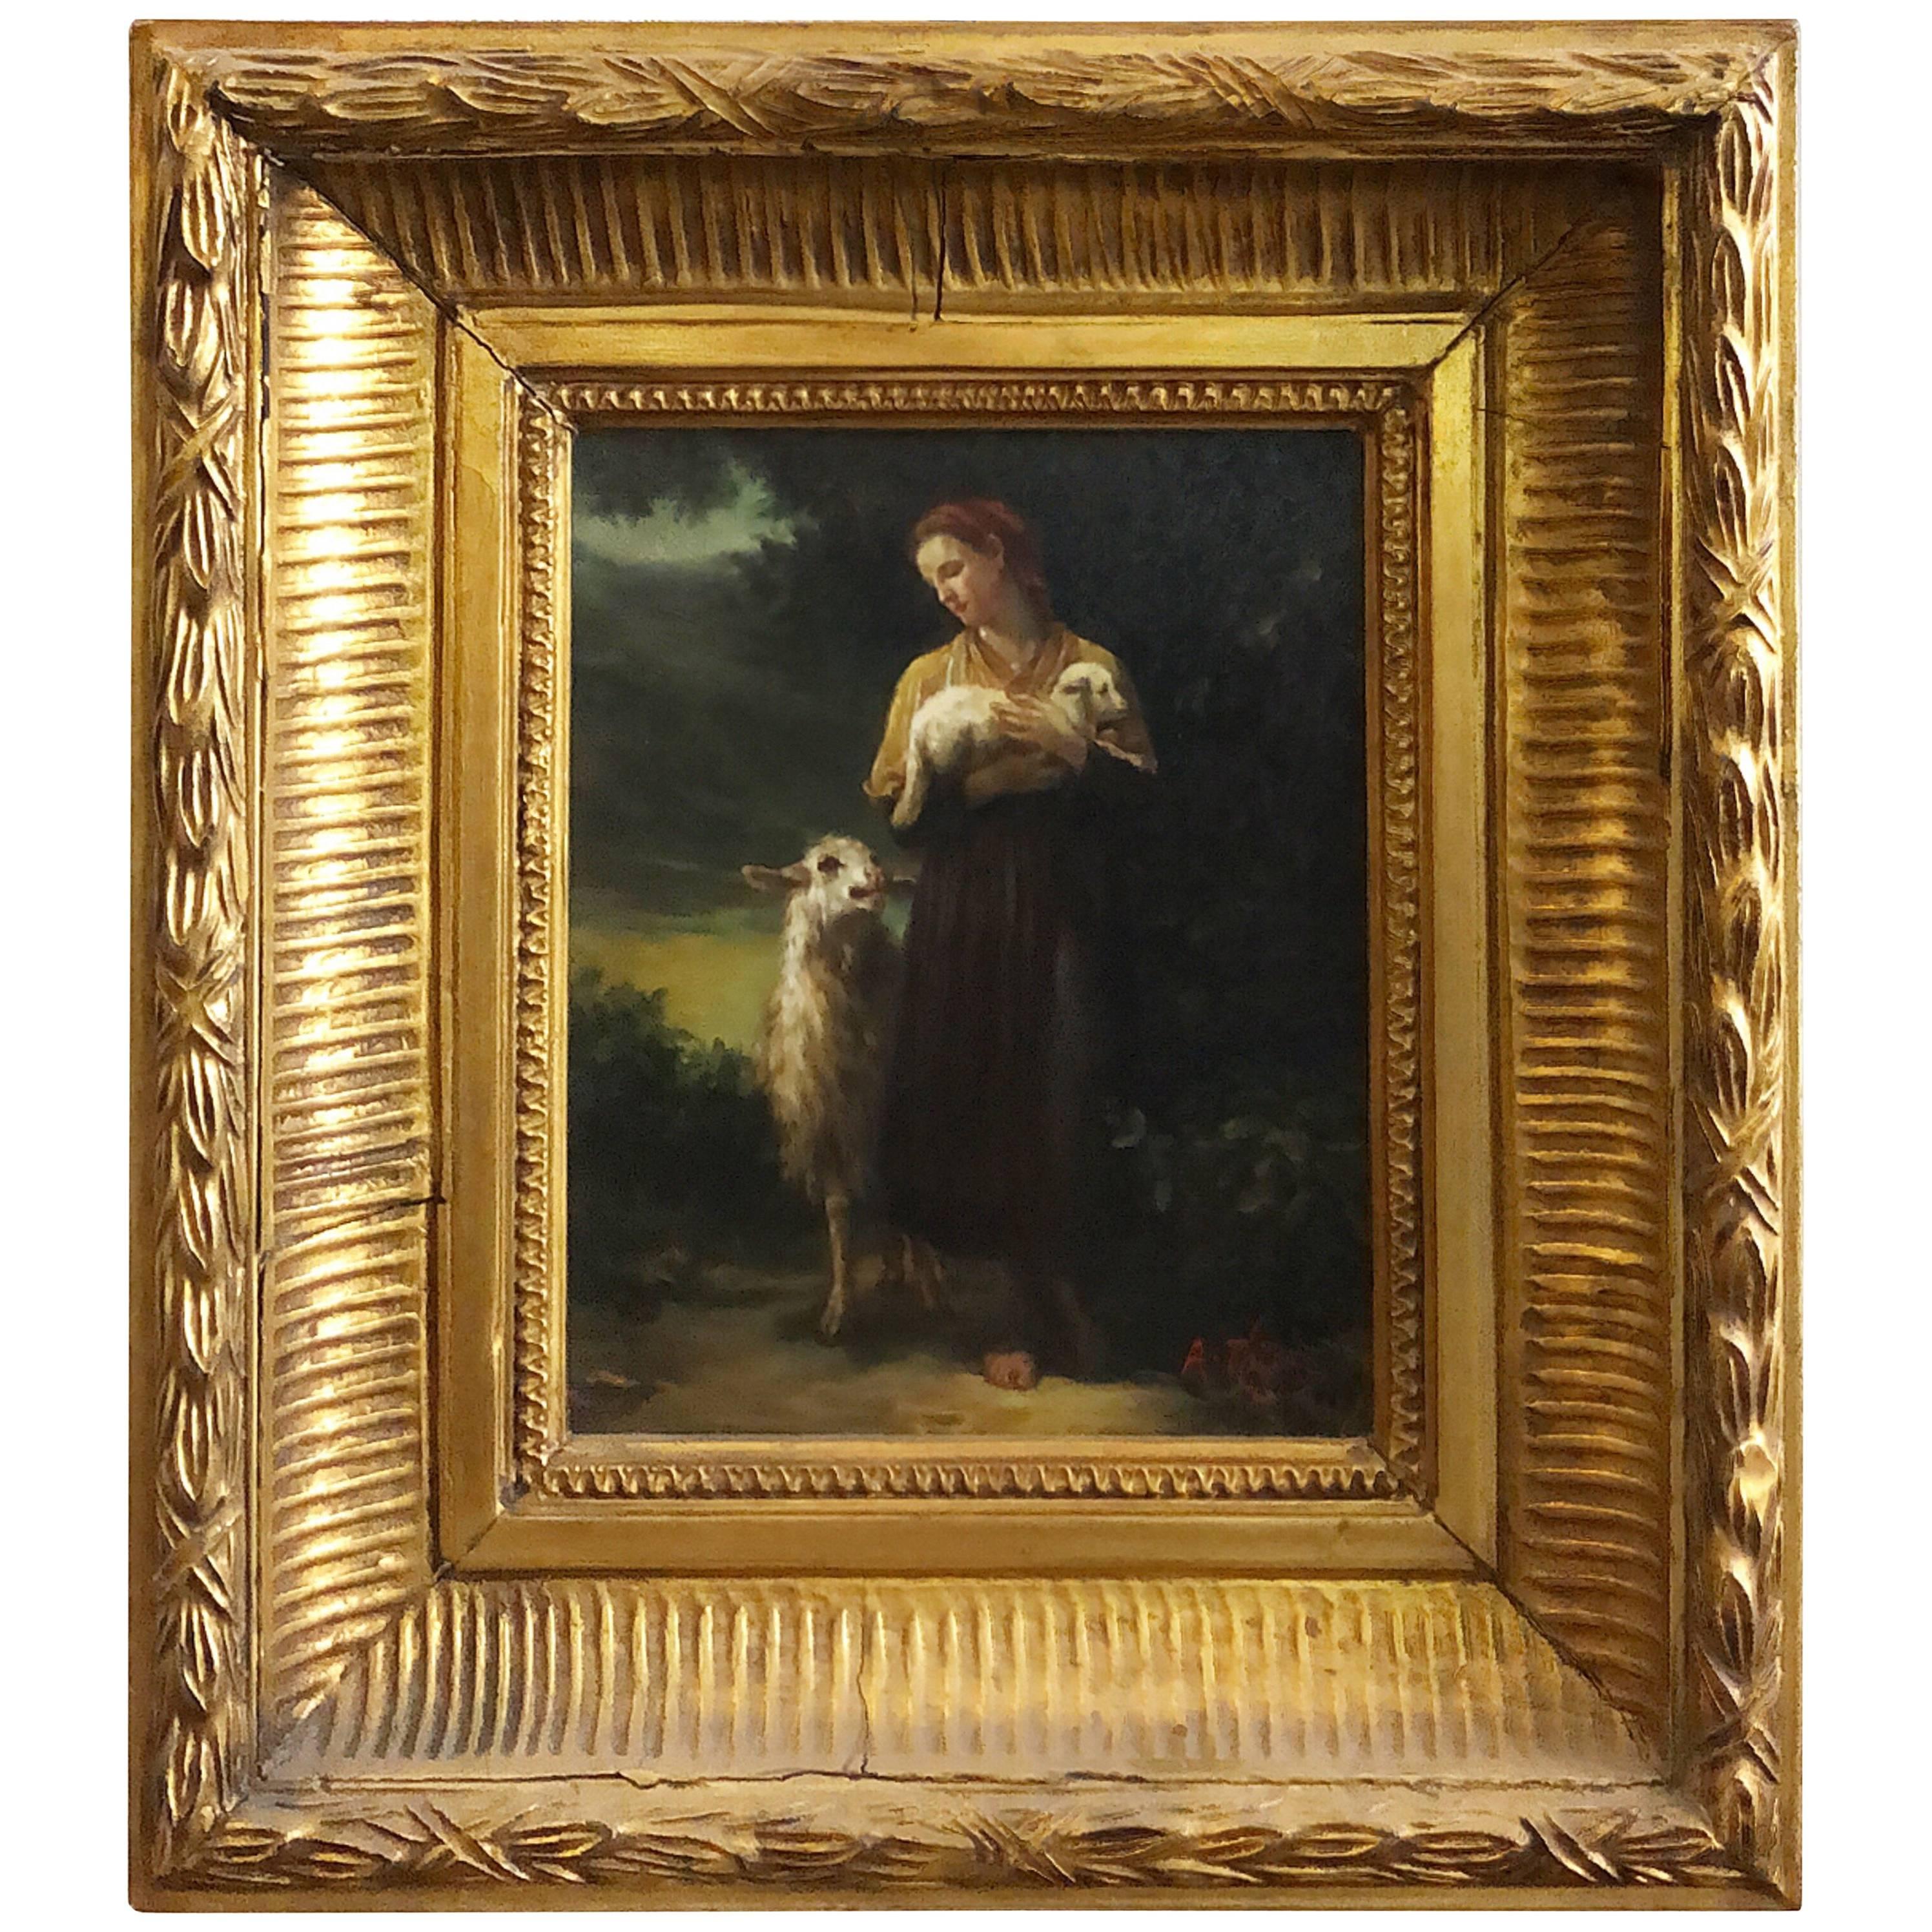 Oil Painting on Wood "the Shepherdess" William-Adolphe Bouguereau